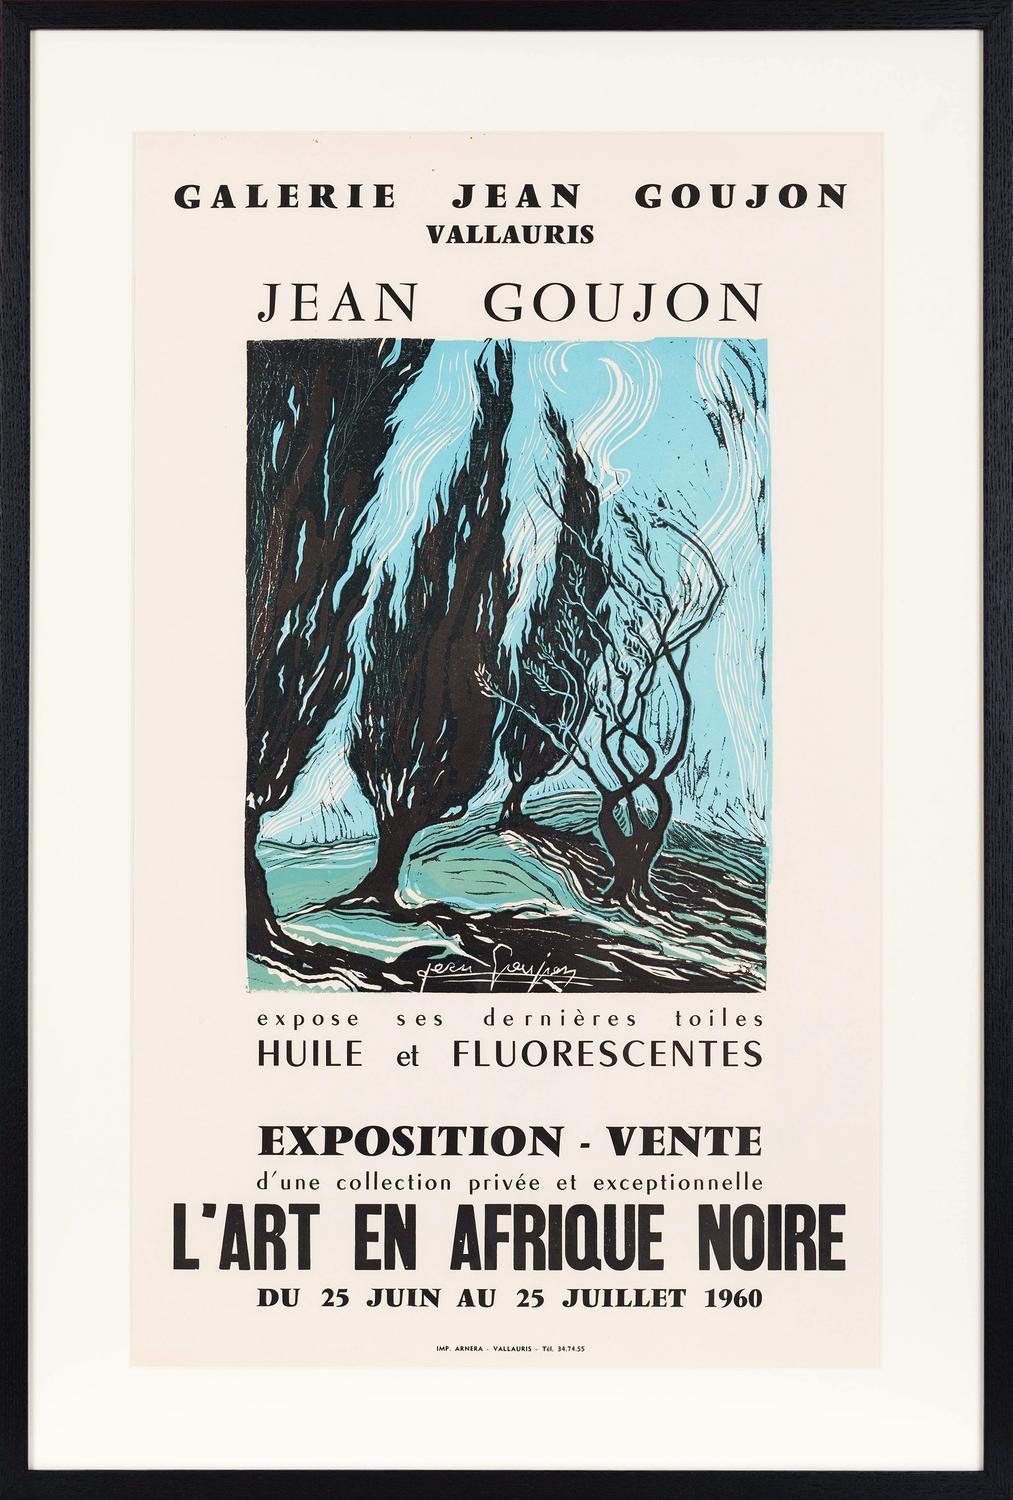 Galerie Jean Goujon Vallauris, 1960